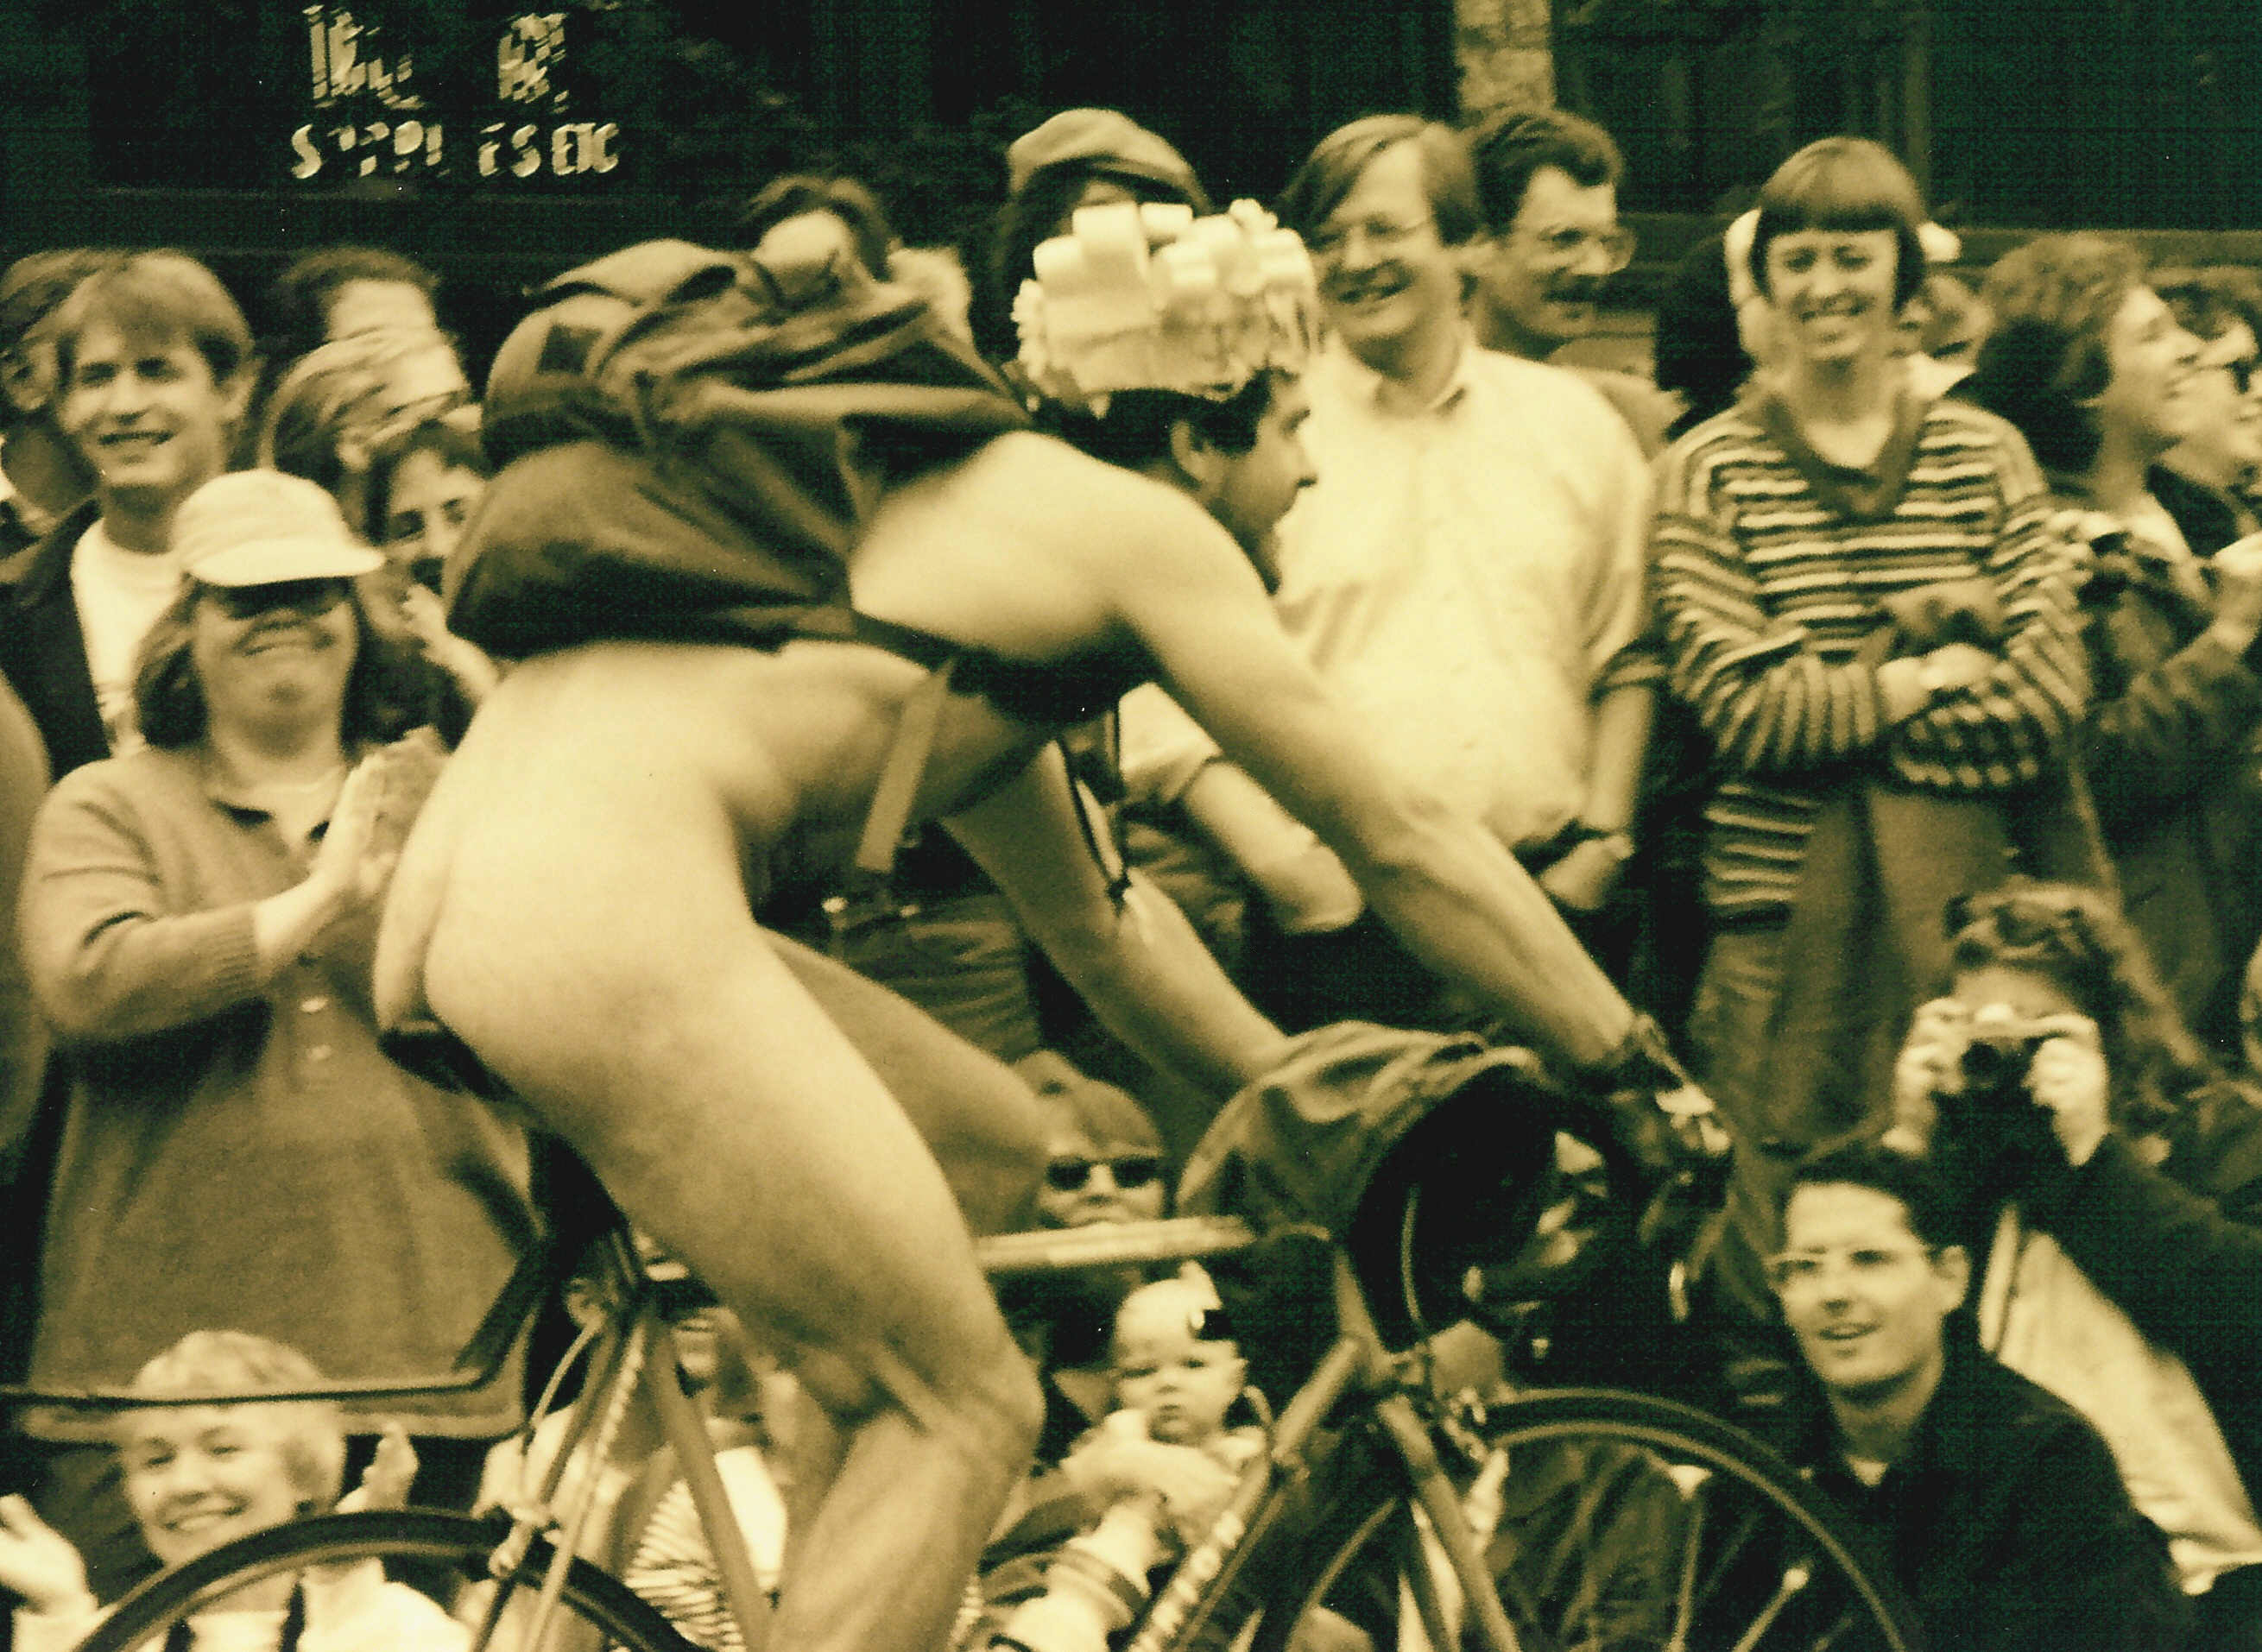 Los angeles world naked bike ride nude